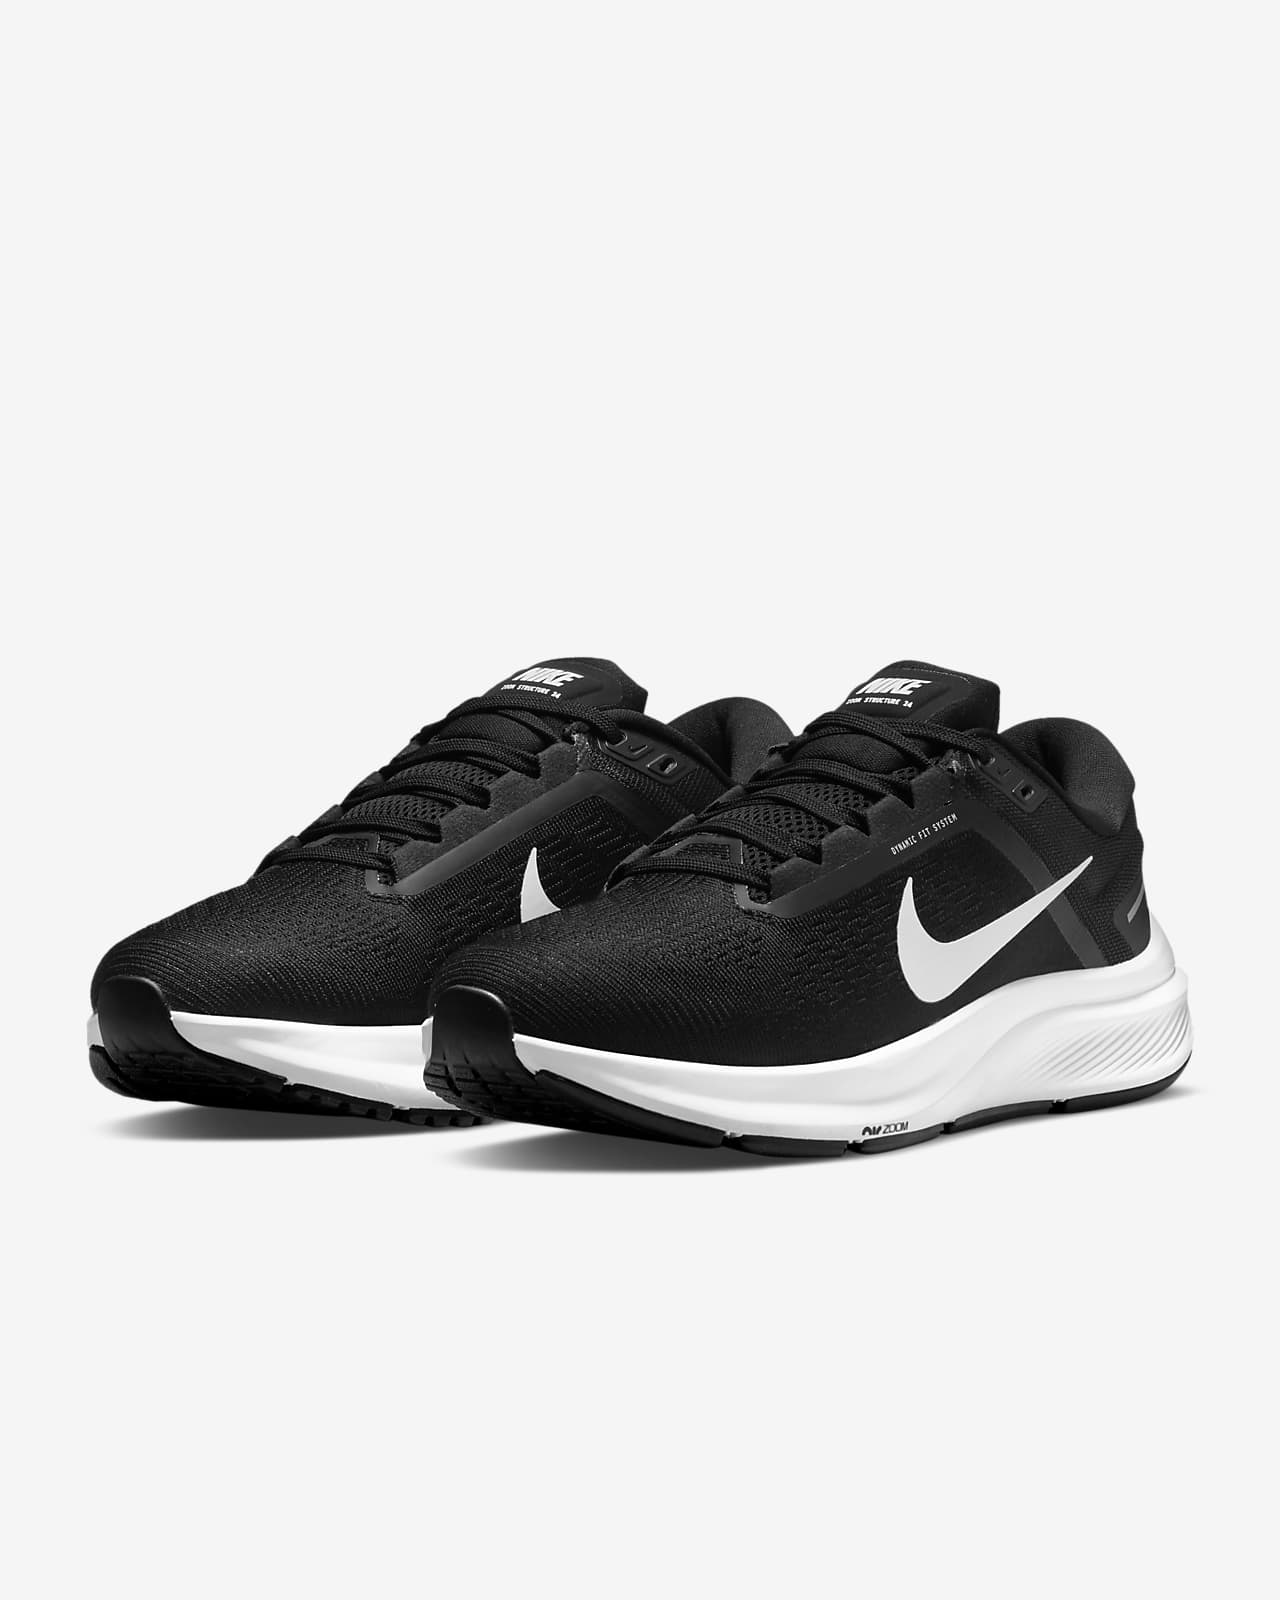 Chaussures de Running Nike Air Zoom Structure 24 Femme Noir Blanc